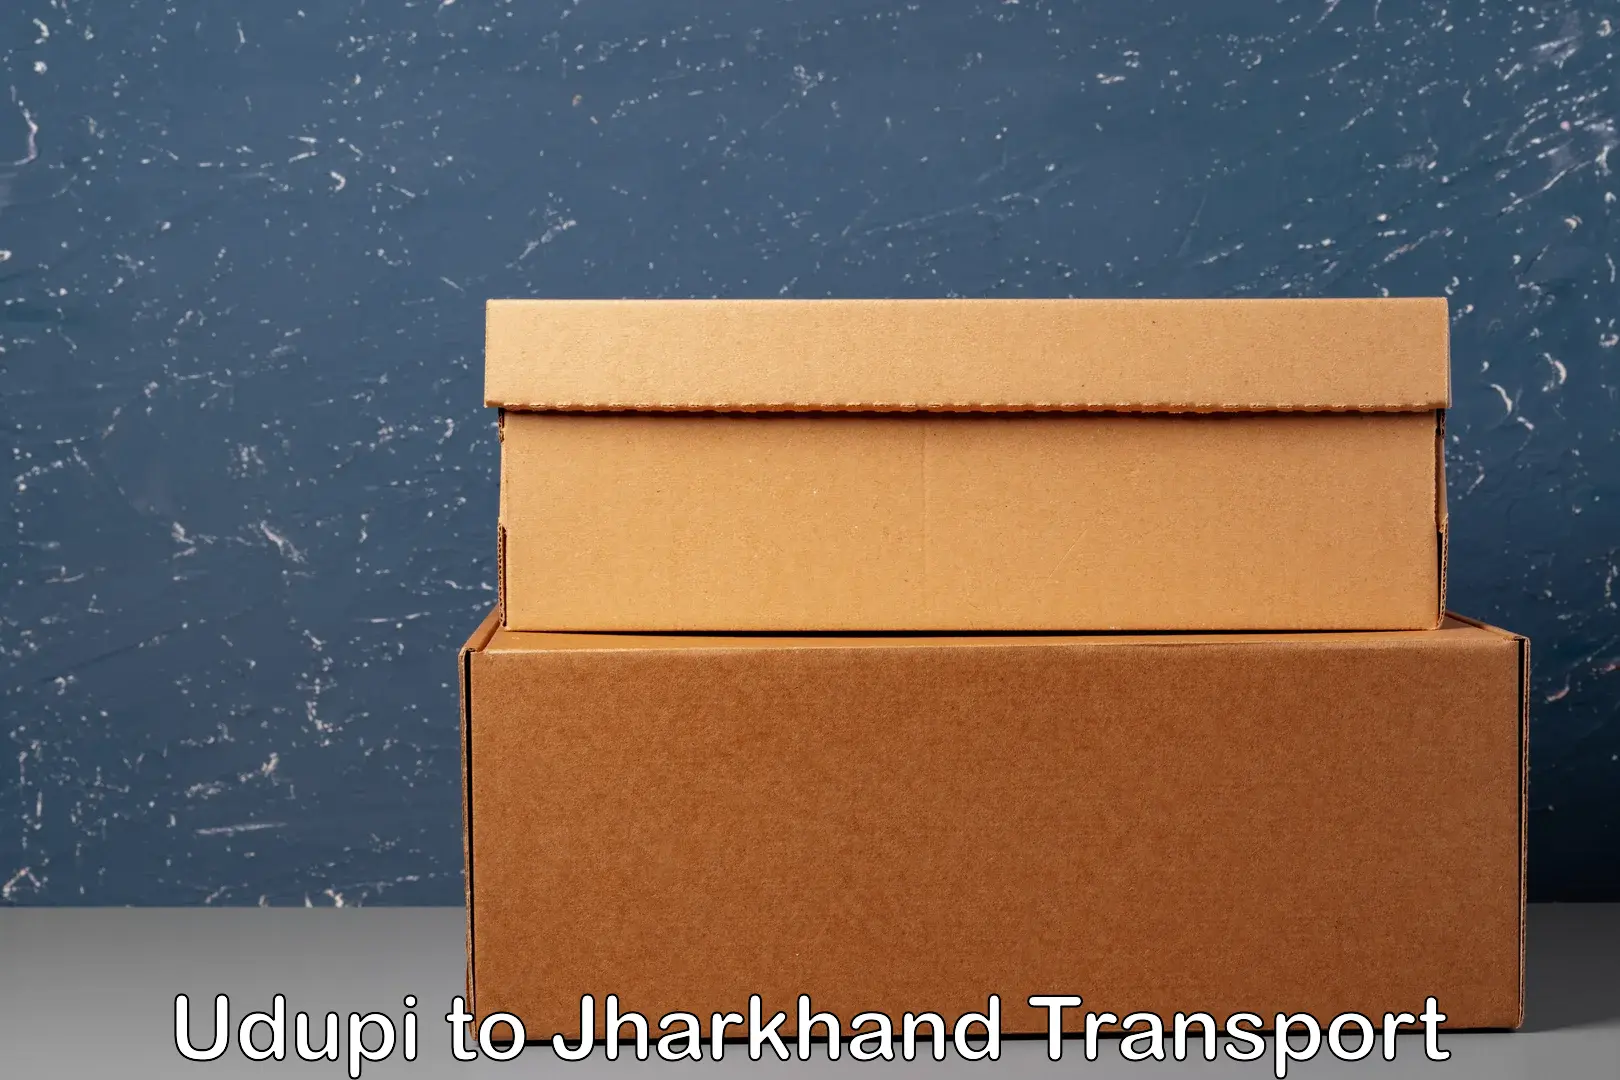 Pick up transport service Udupi to Jharkhand